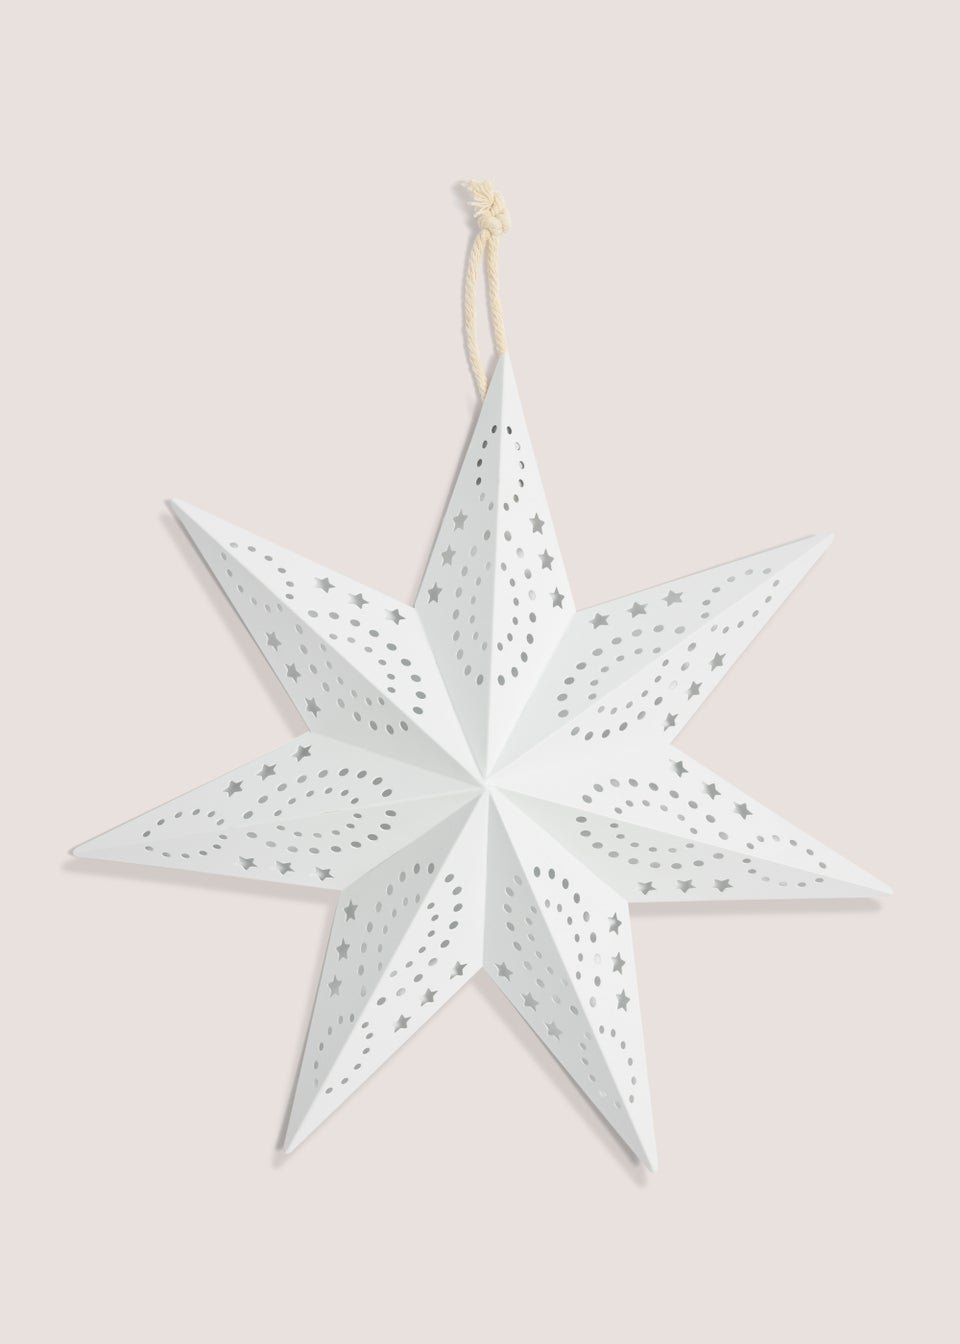 White Metal Medium Christmas Hanging Star (20cm x 40cm x 40cm)